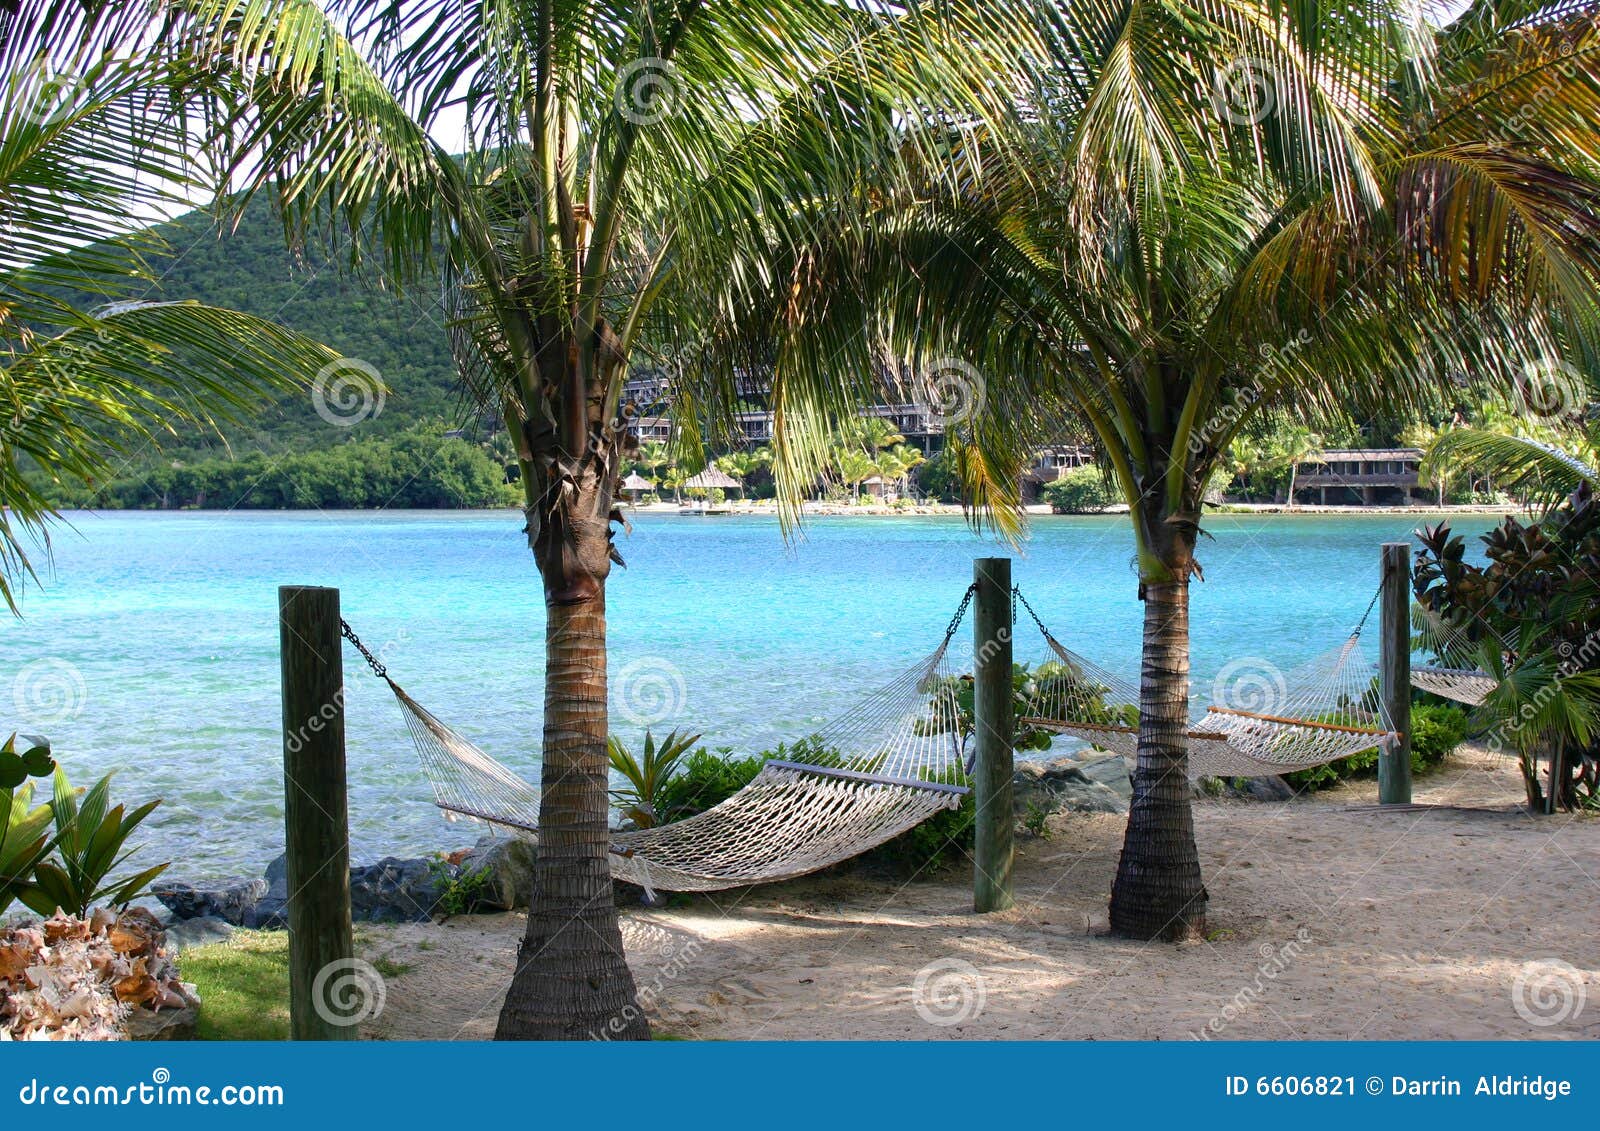 hammocks under palm trees